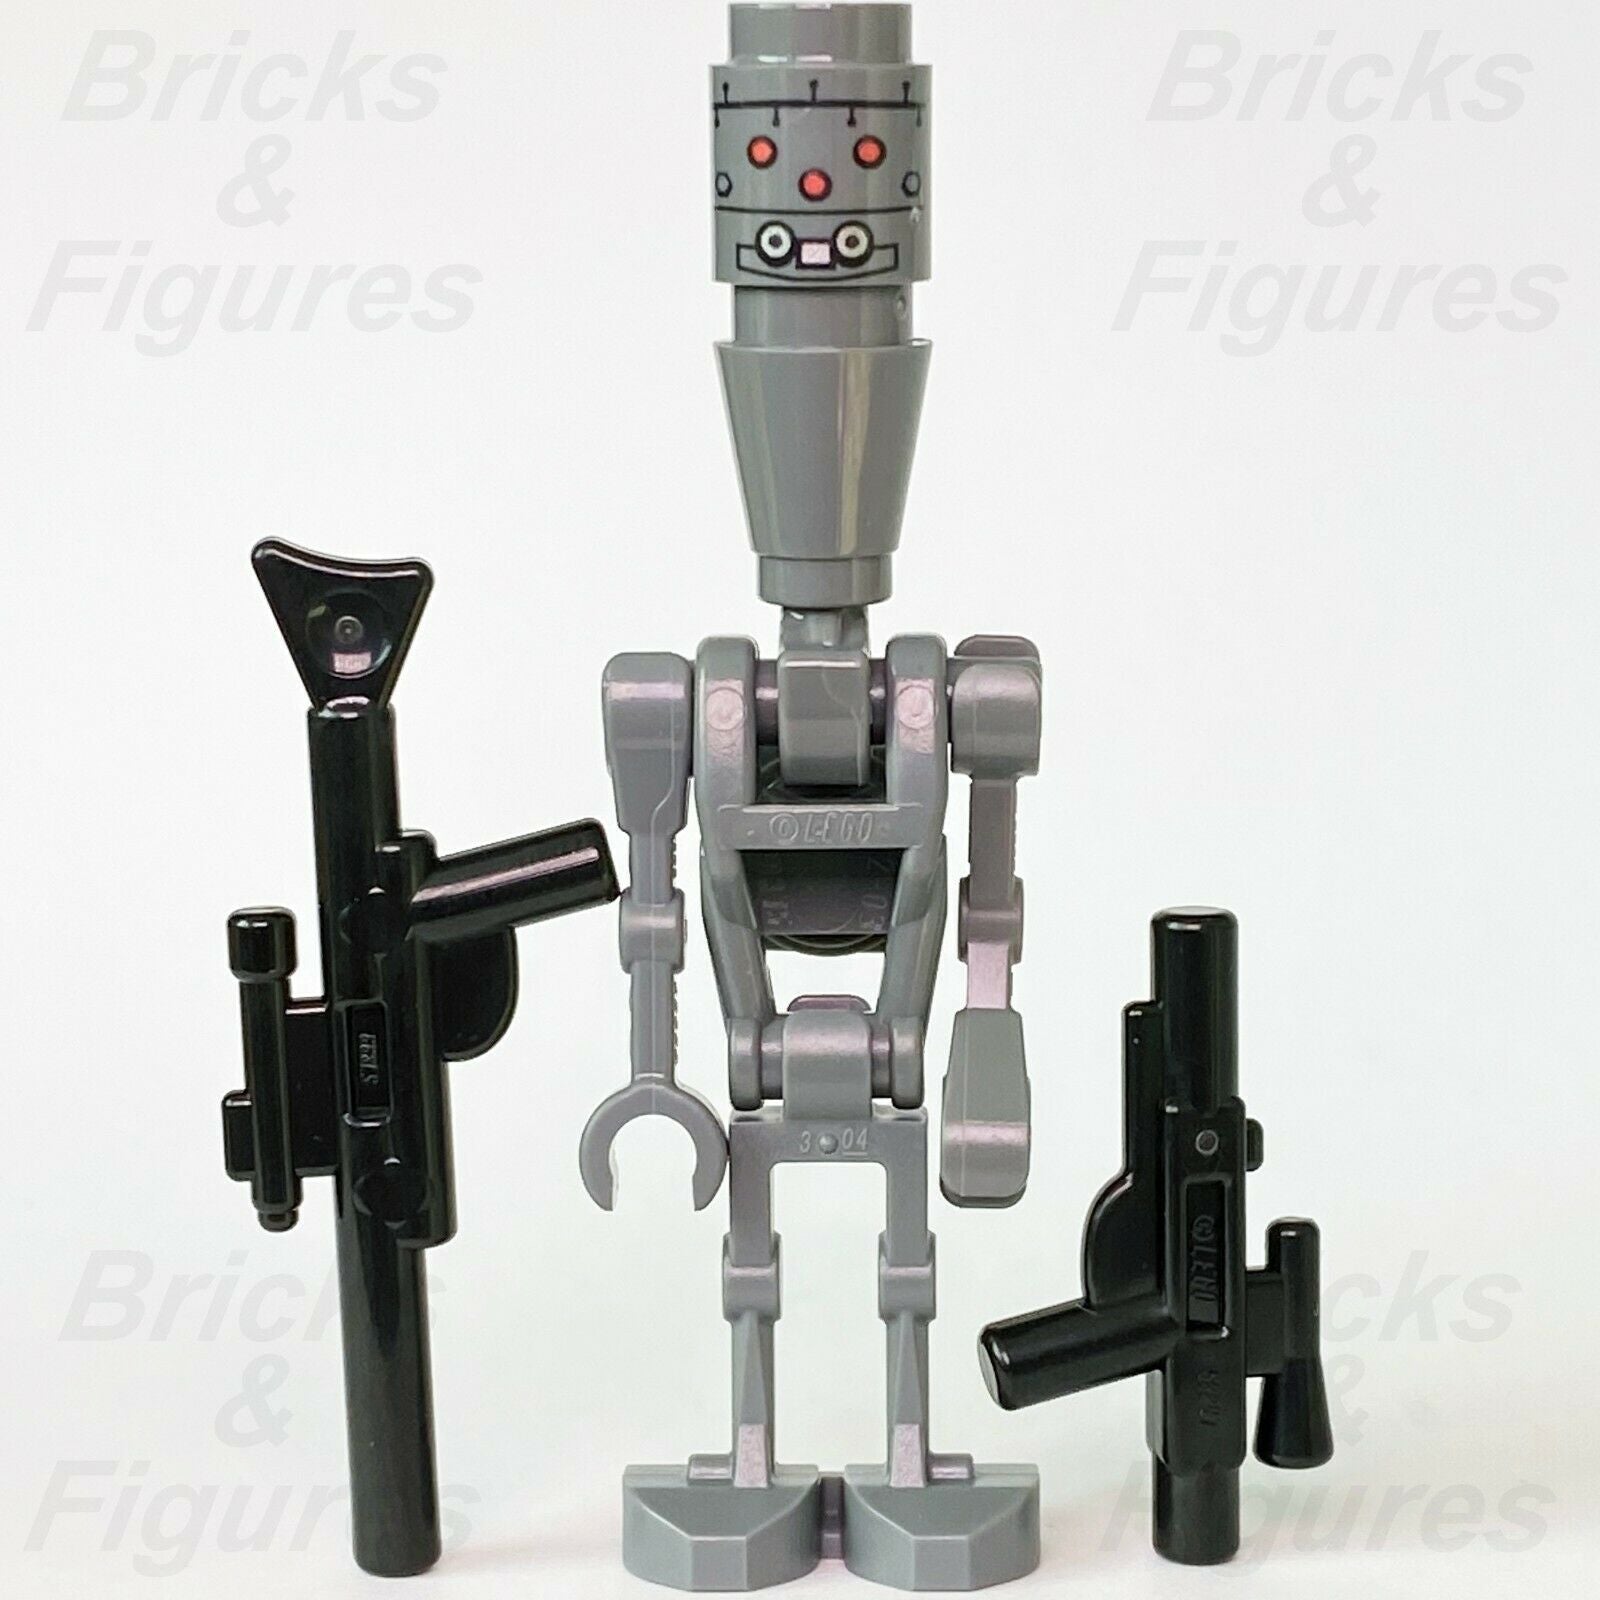 New Star Wars LEGO IG-11 Bounty Hunter Droid "The Mandalorian" Minifigure 75292 - Bricks & Figures